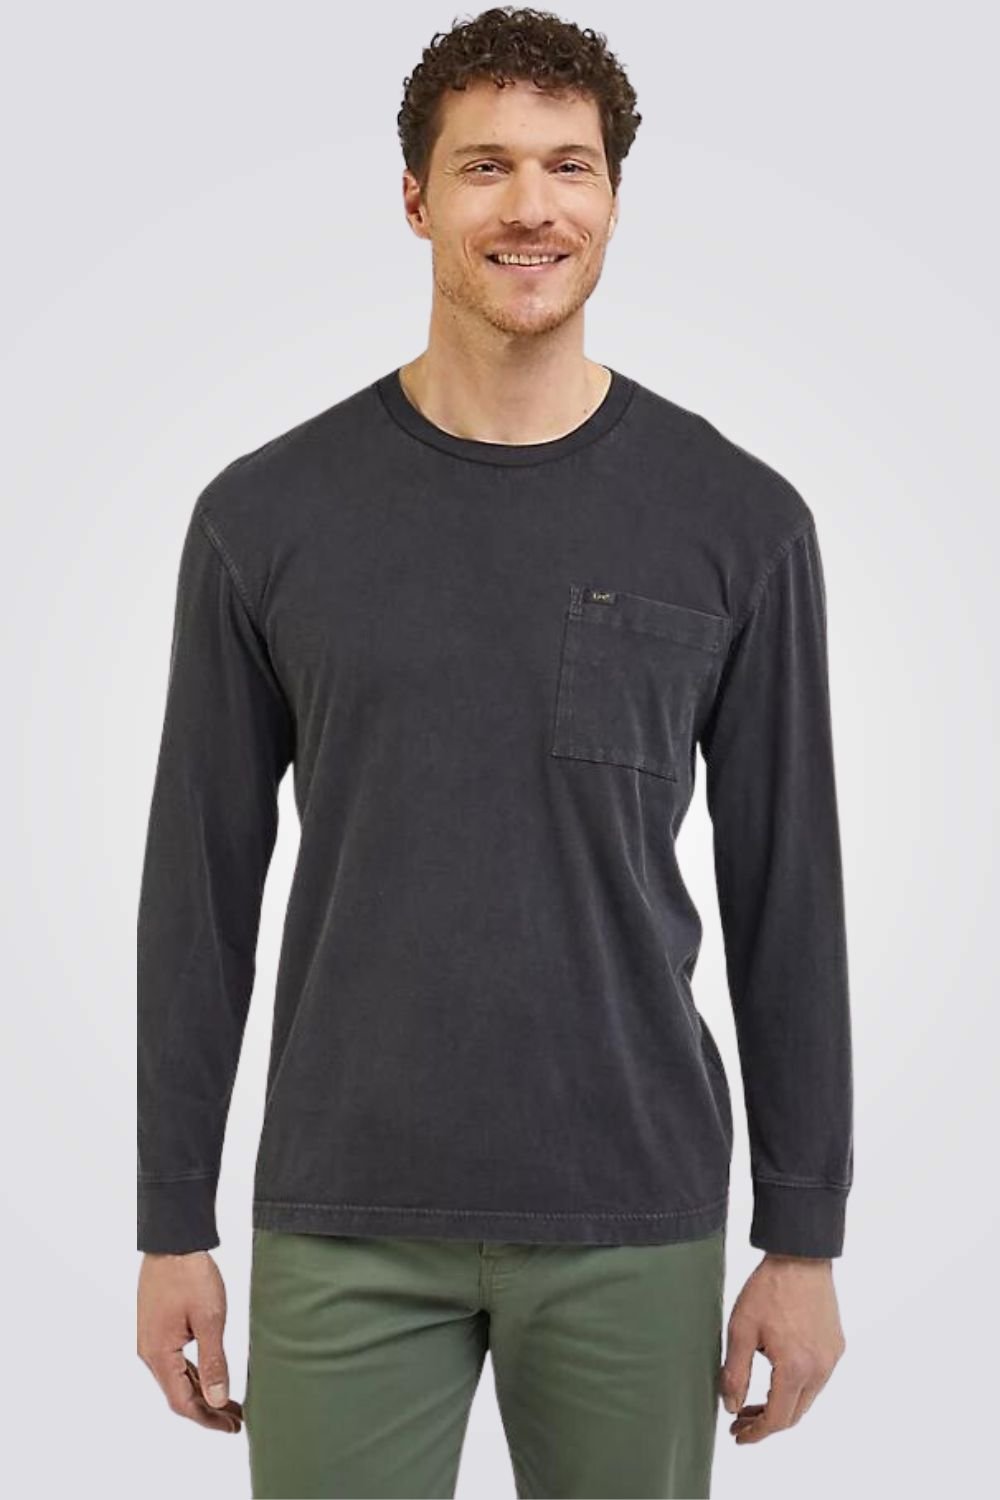 LEE - חולצה ארוכה לגברים LS POCKET בצבע שחור - MASHBIR//365